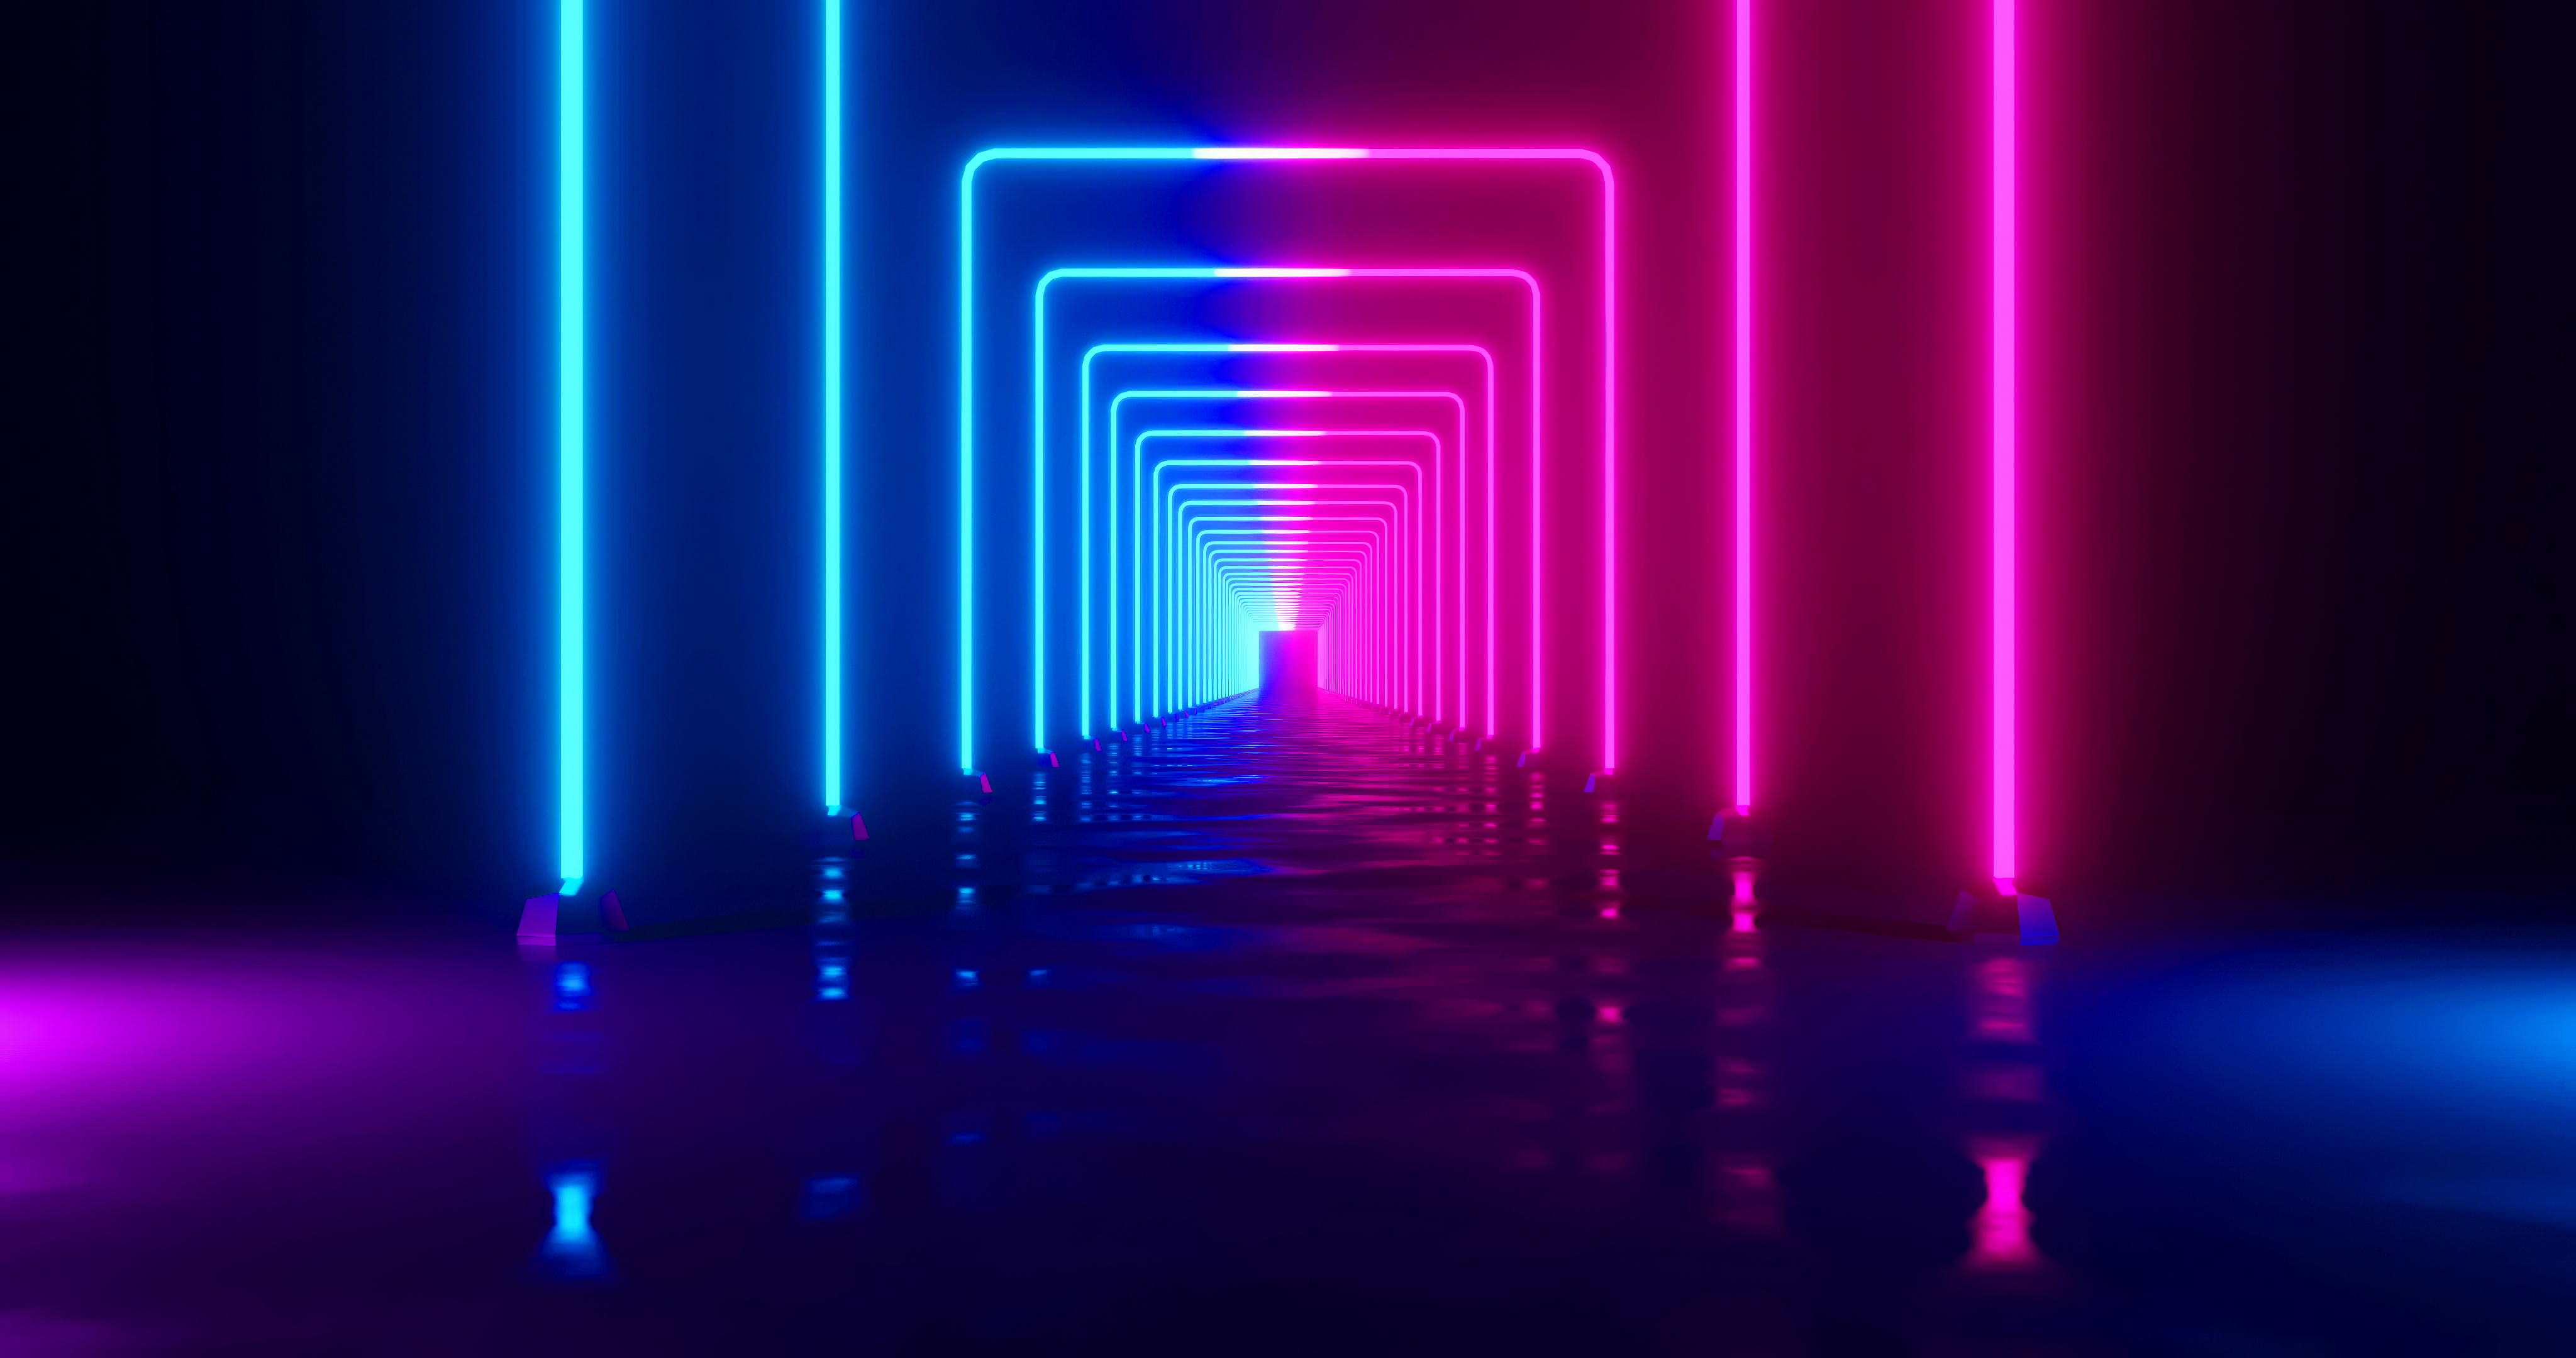 General 4096x2160 blue pink neon lights bright water digital art